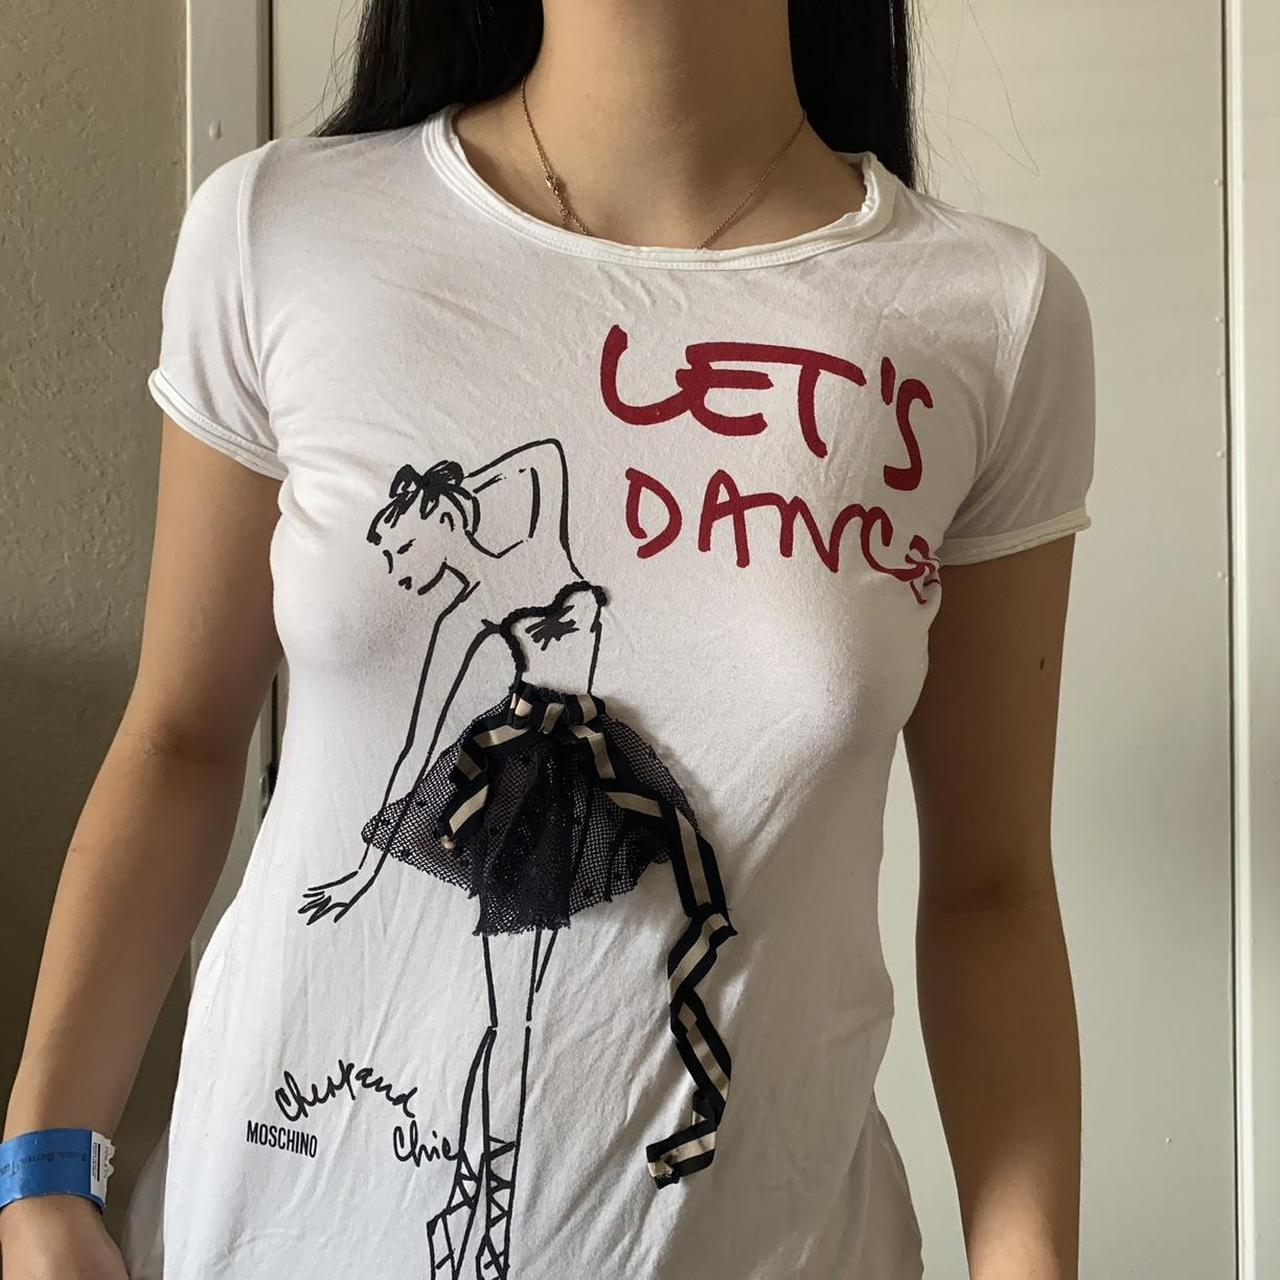 Moschino Cheap & Chic Women's T-shirt (2)